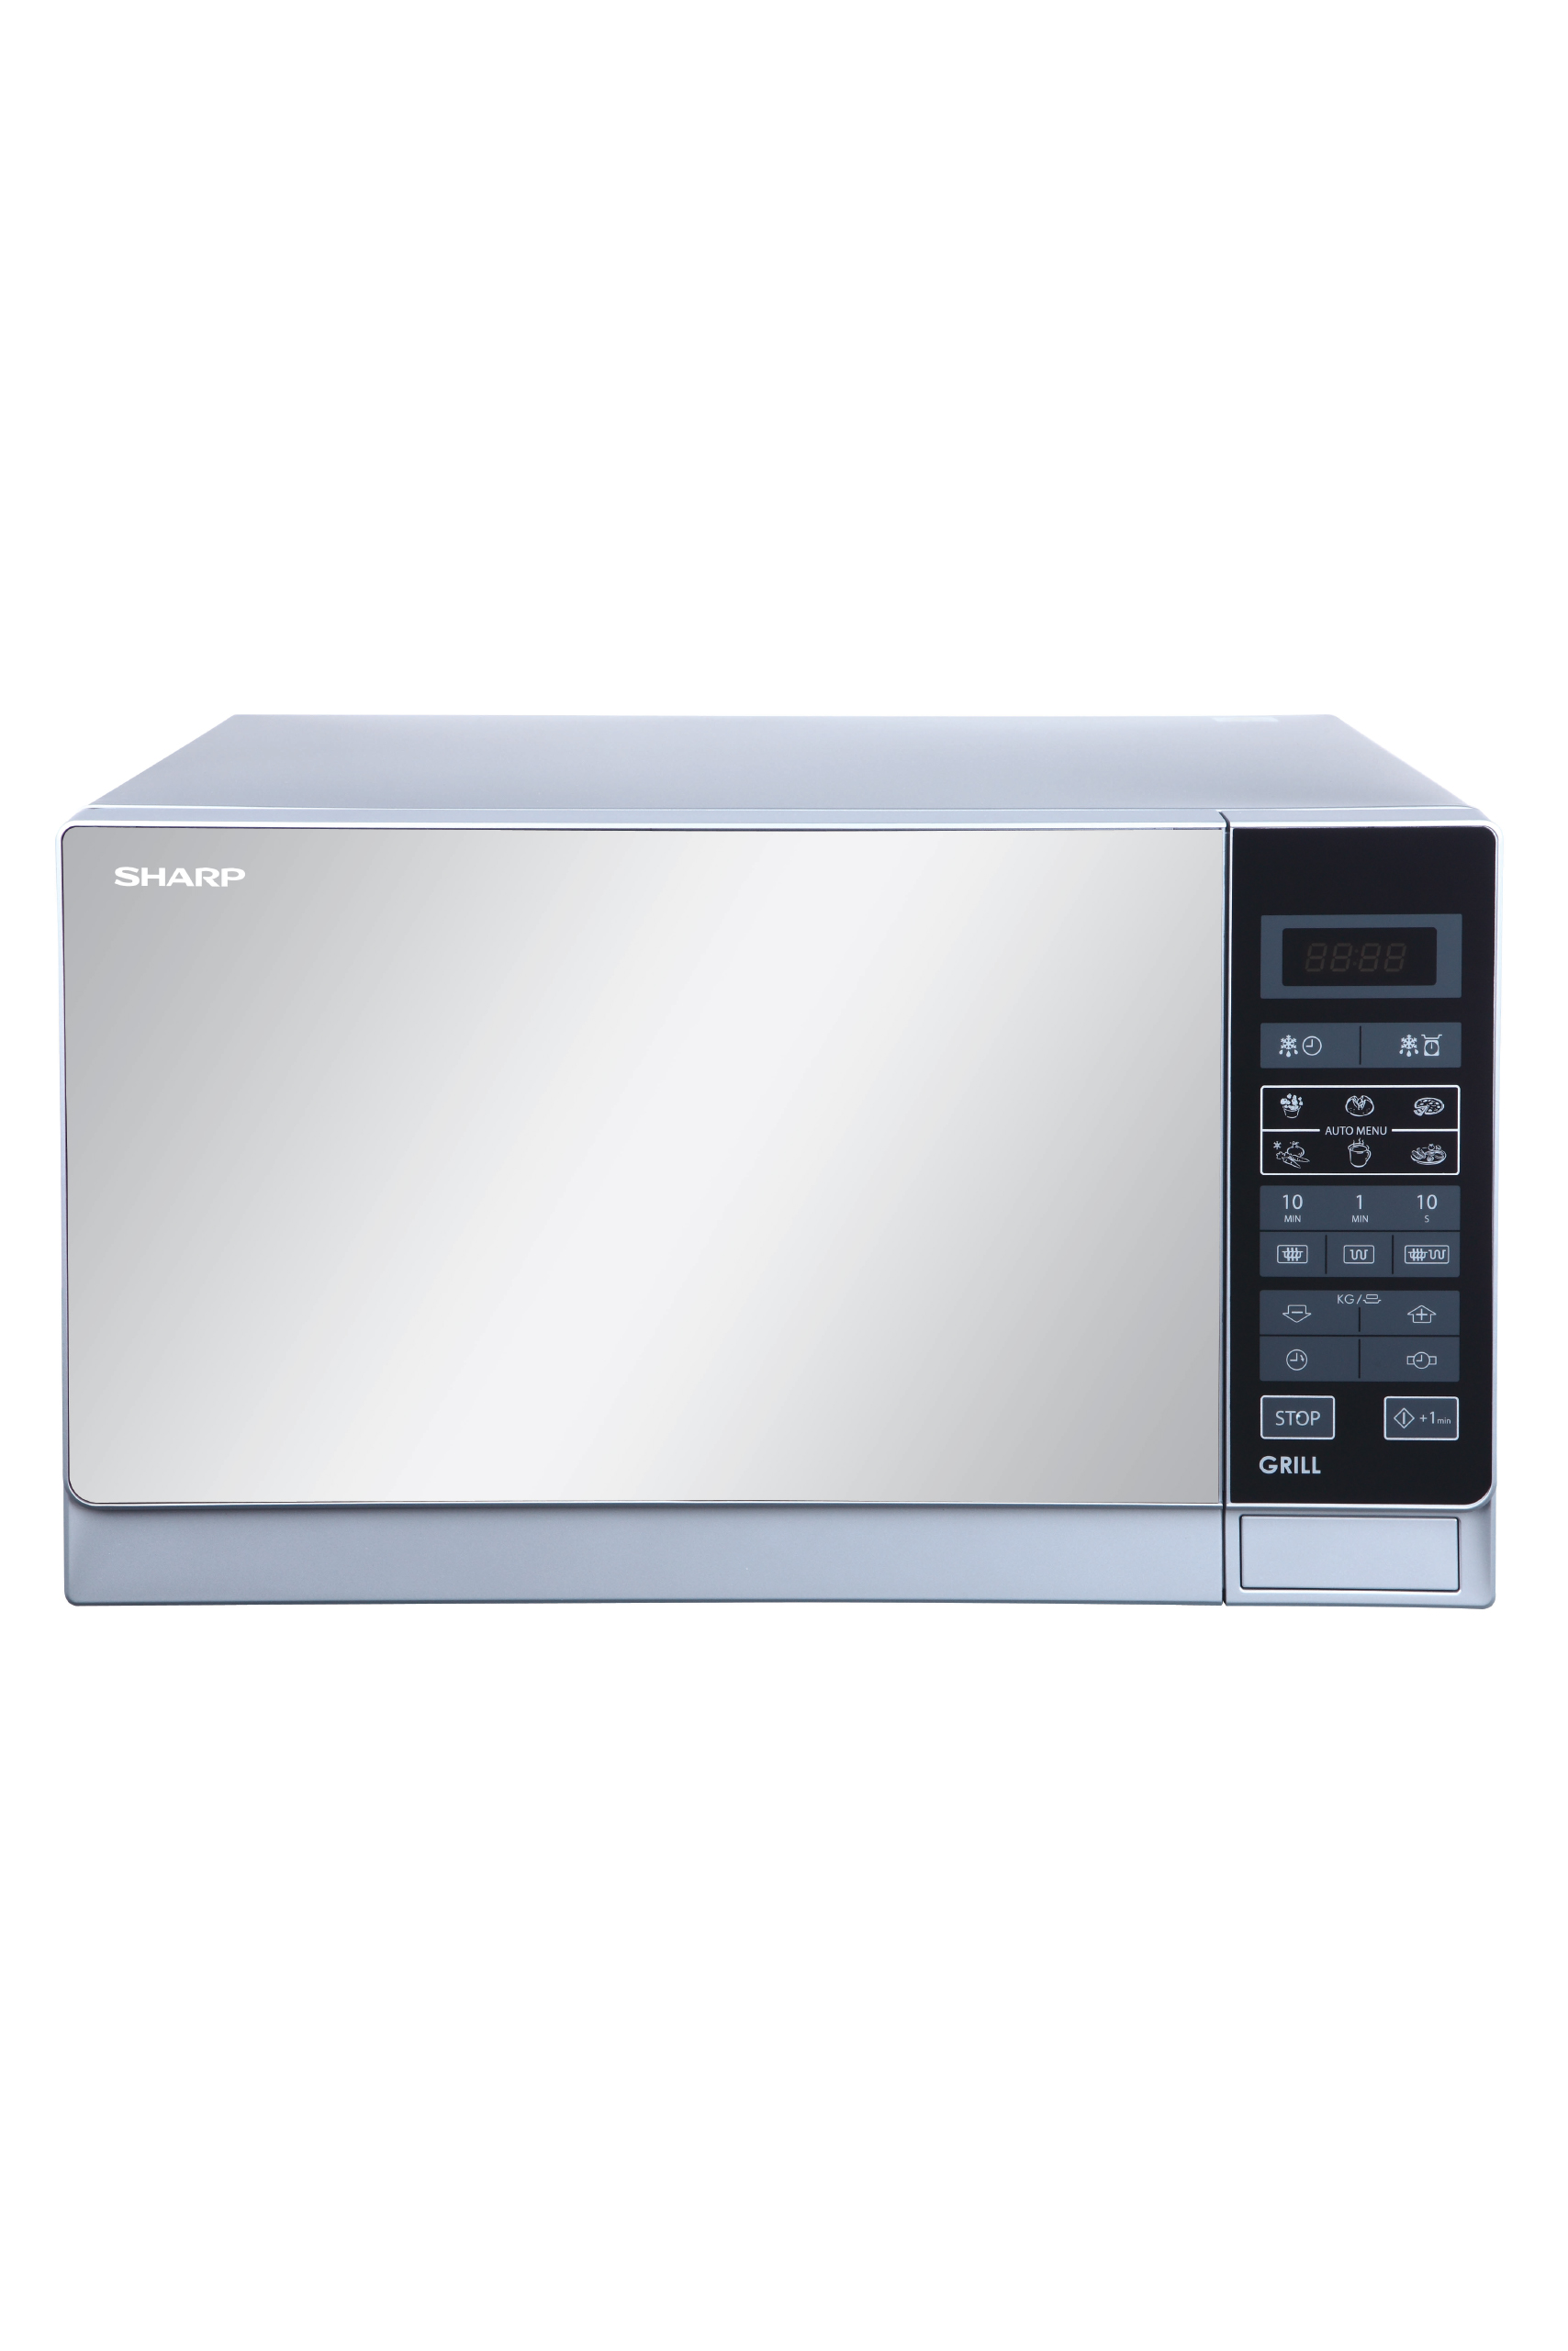 Sharp Microwave 25 Liter – Silver